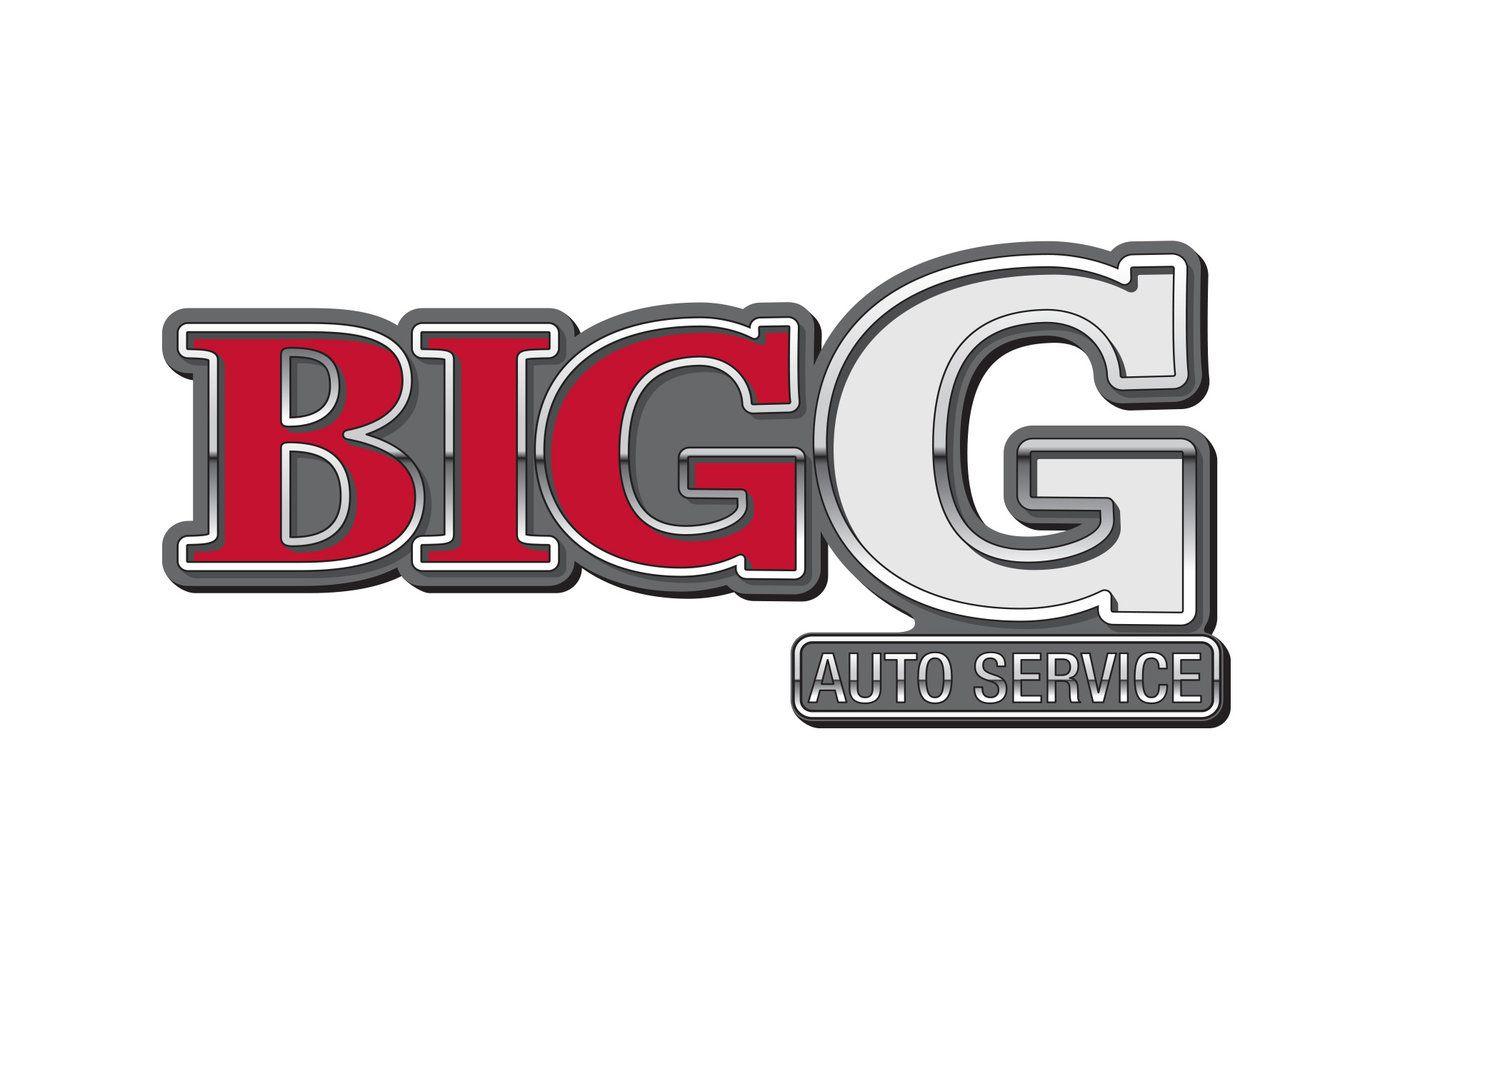 Big G Logo - Big G Auto Service